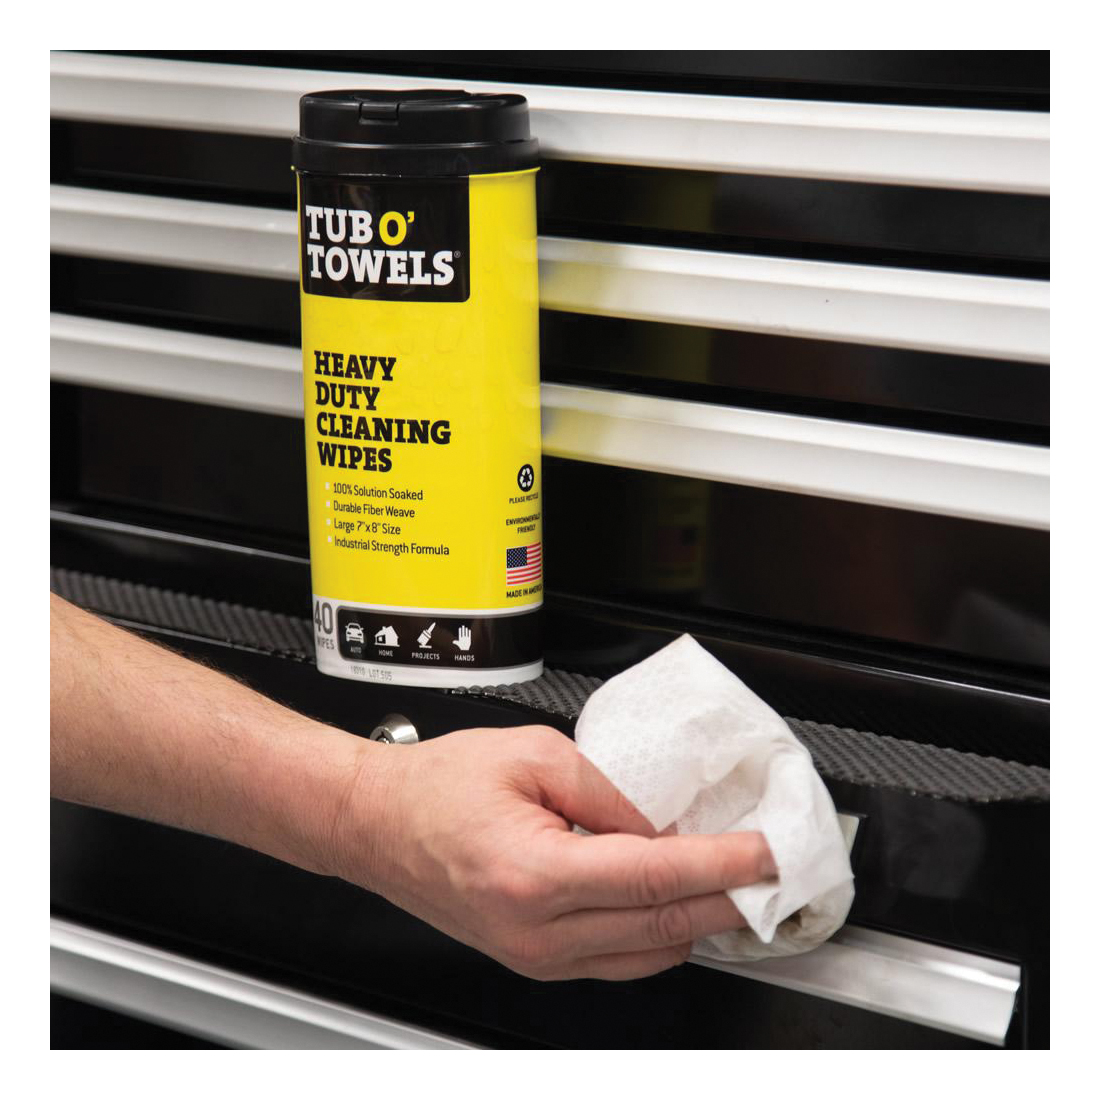 Tub O' Towels Heavy Duty Cleaning Wipes - 40 wipes